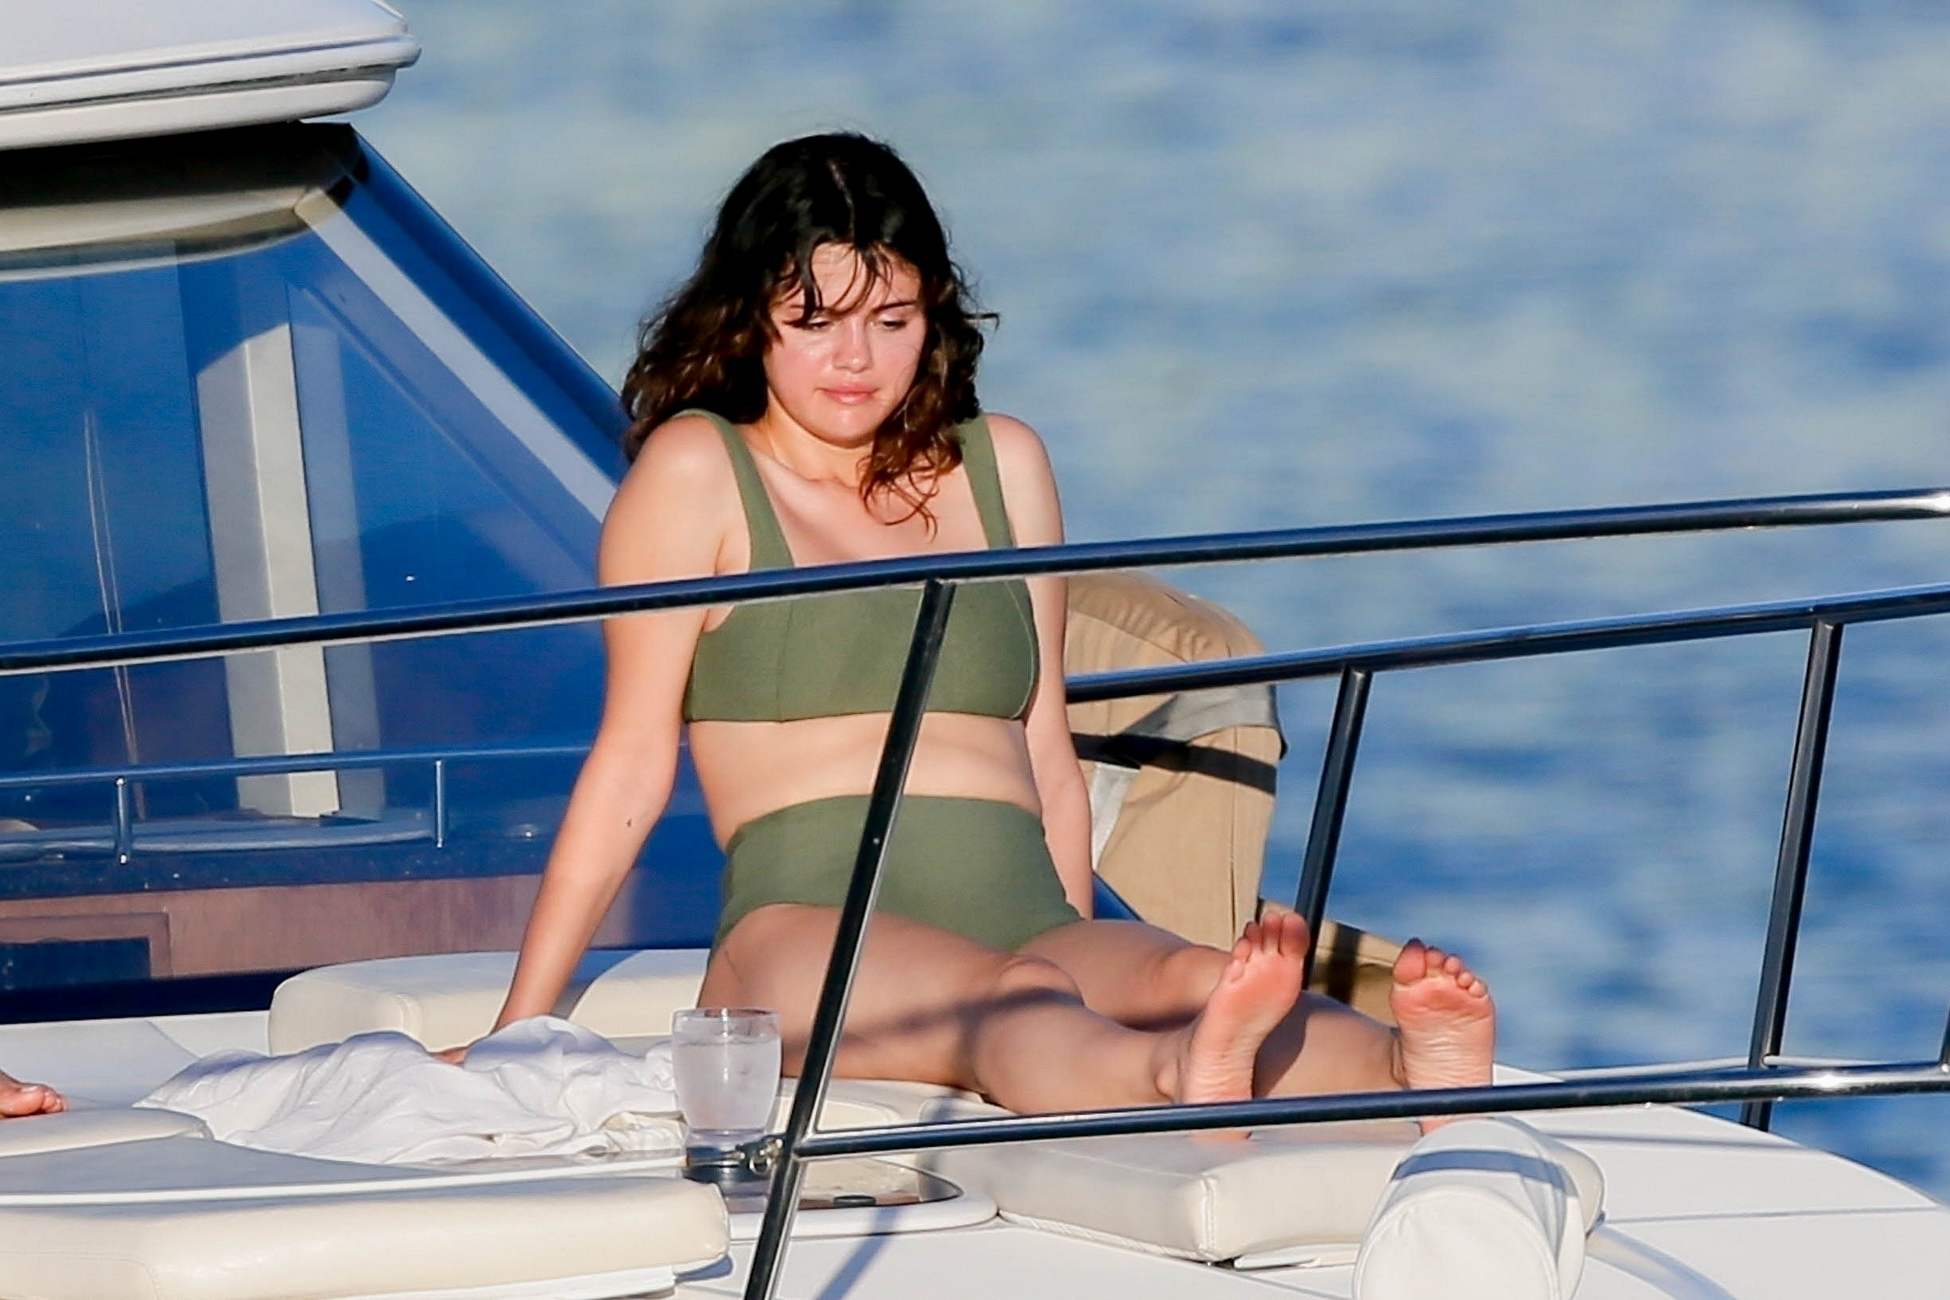 Selena_Gomez-stuns_as_she_soaks_up_the_sun_in_a_green_bikini_in_Hawaii2C_HI...